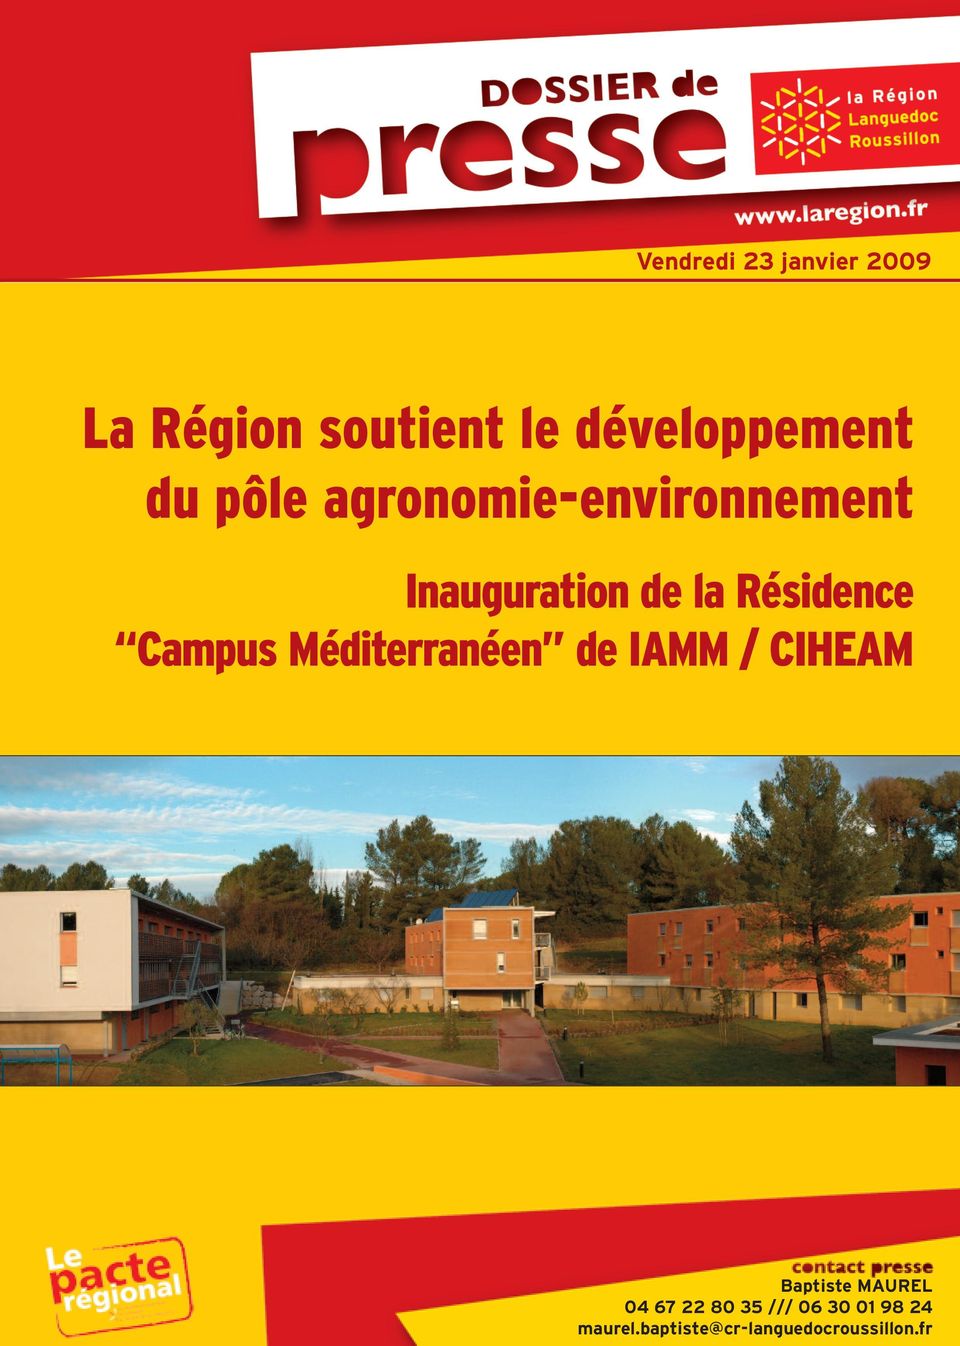 Campus Méditerranéen de IAMM / CIHEAM Baptiste MAUREL 04